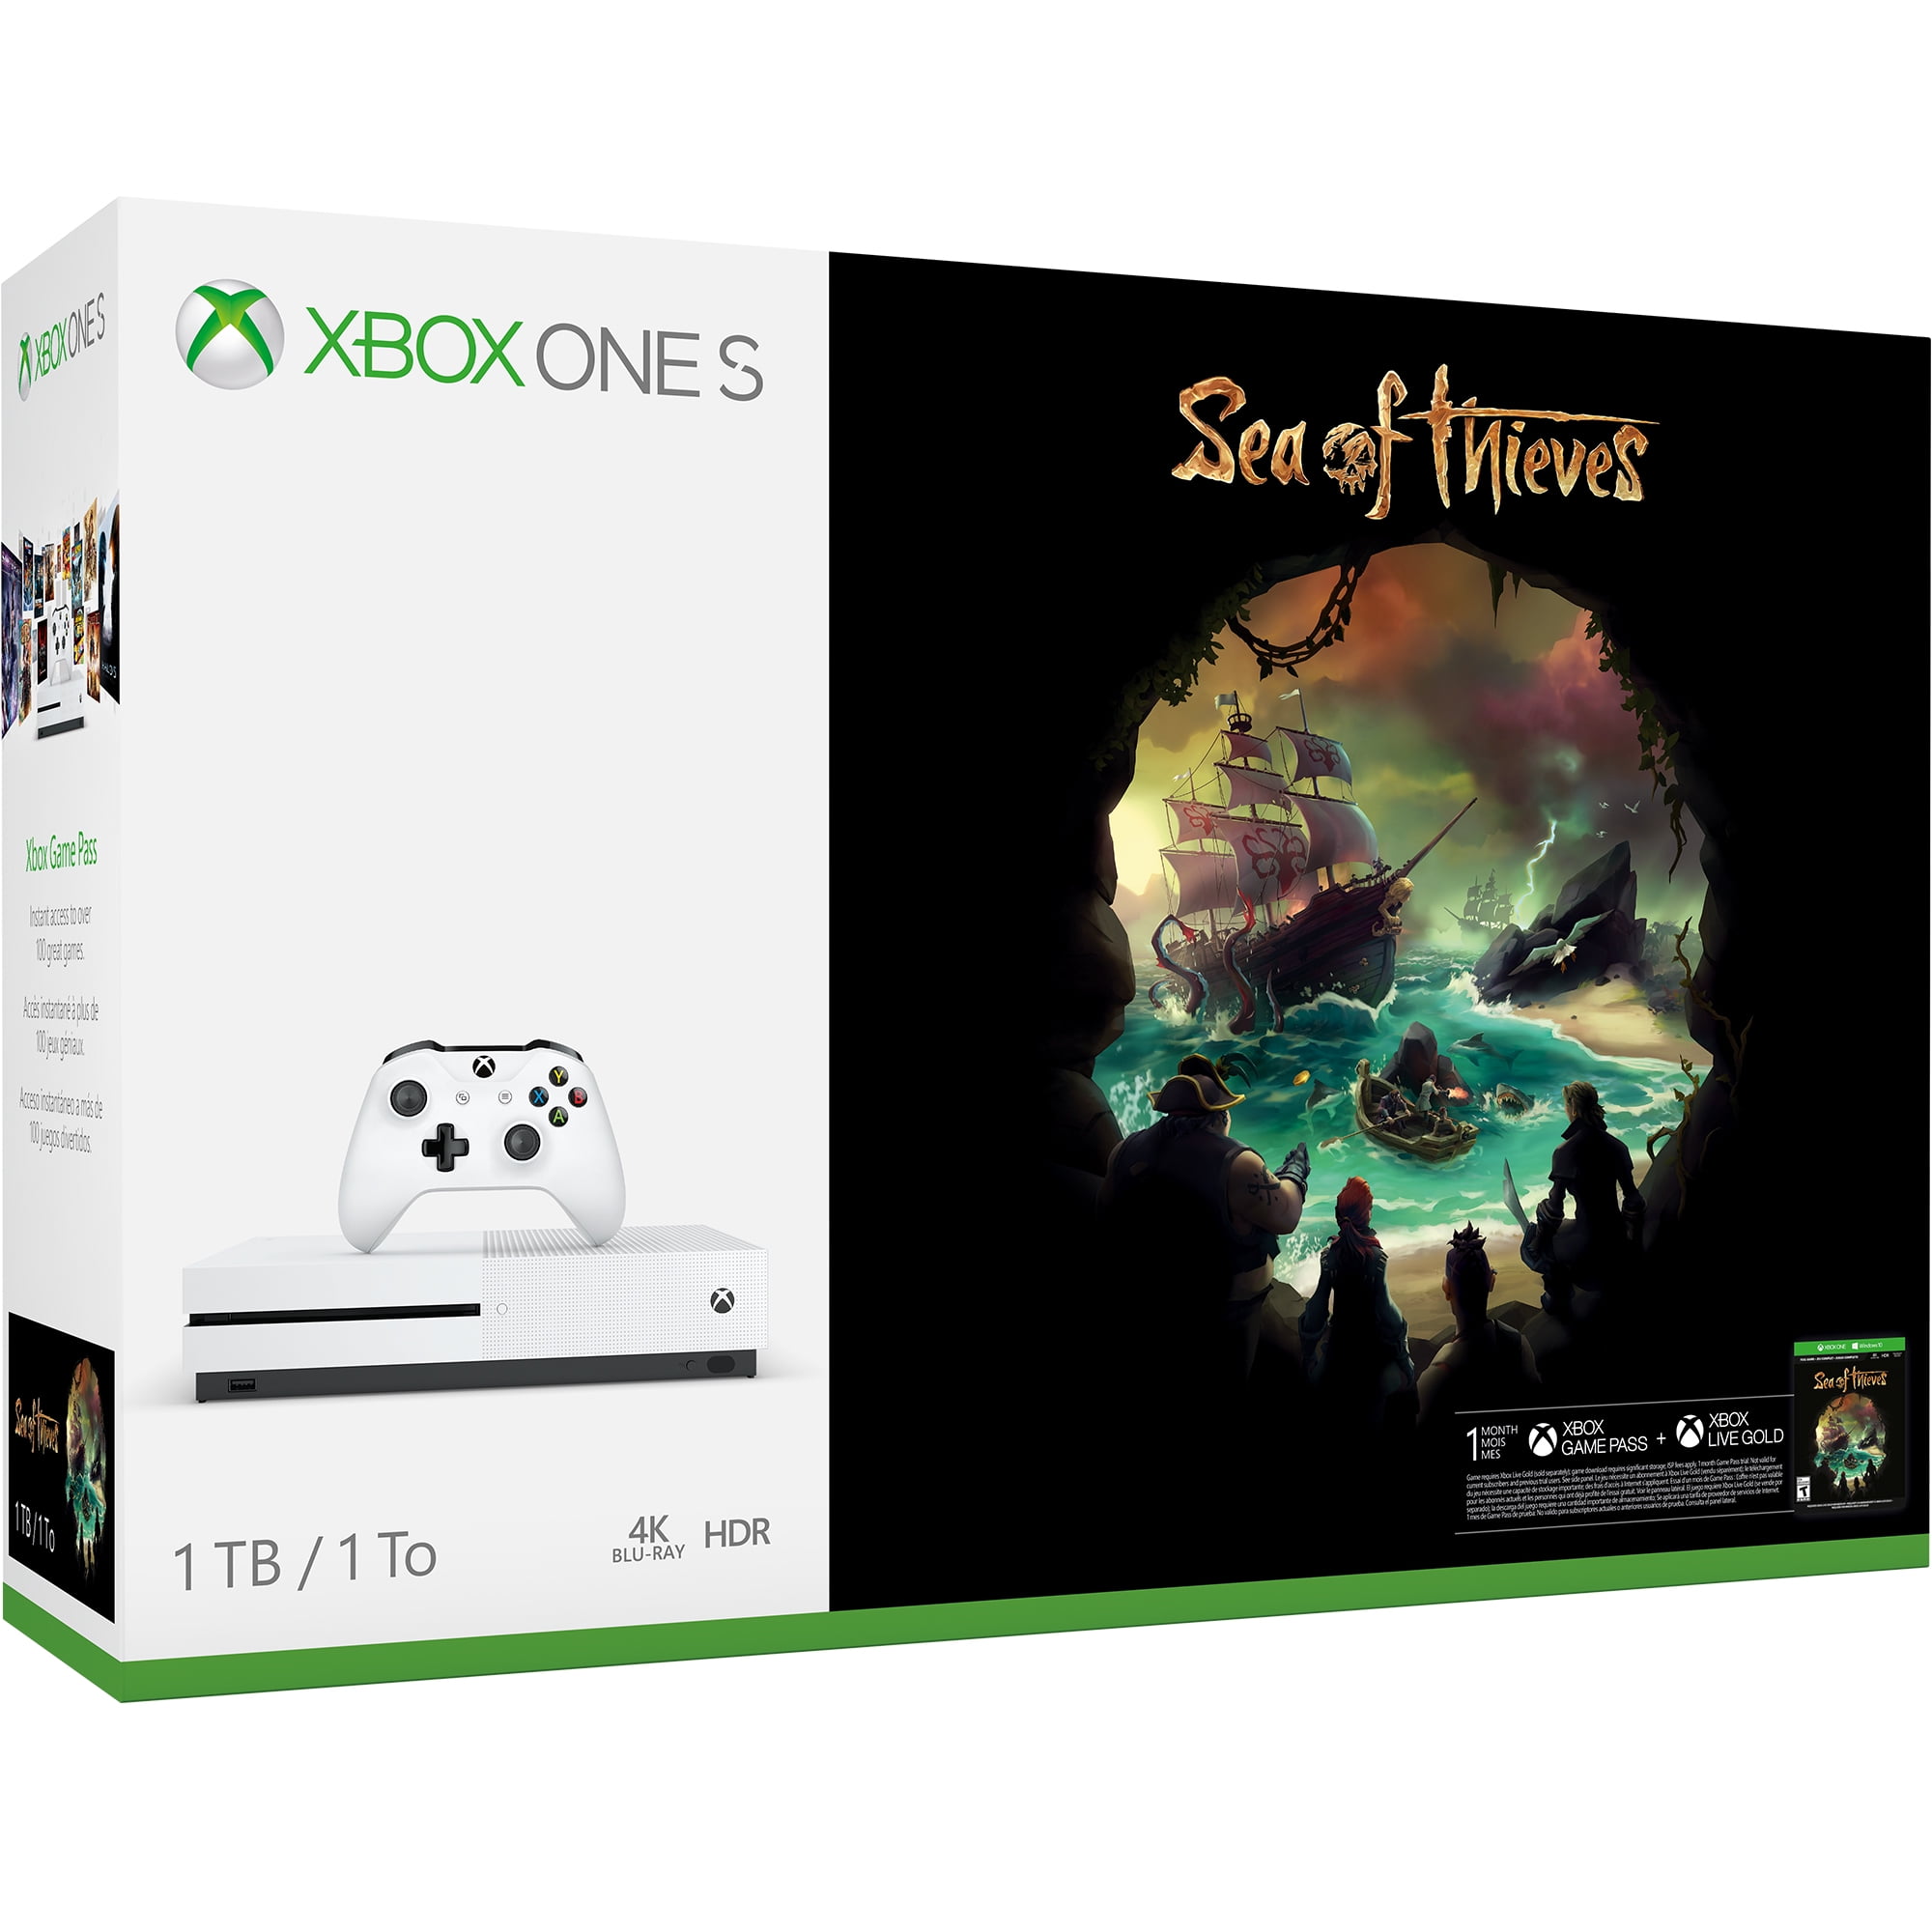 Roest vertaling Ijzig Microsoft Xbox One S 1TB Sea of Thieves Bundle, White, 234-00324 -  Walmart.com